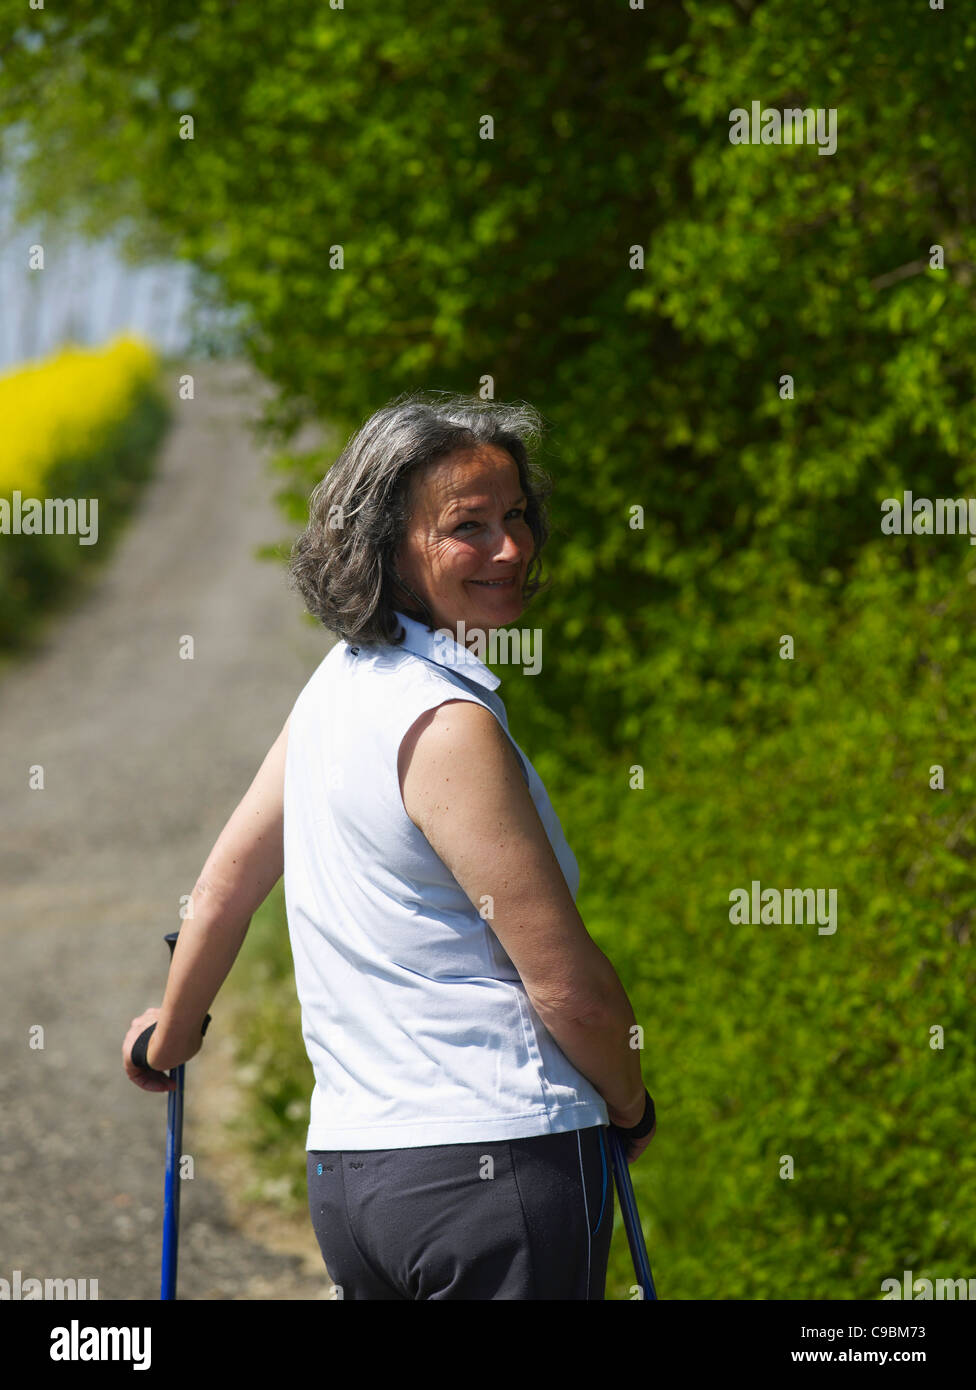 Germany, Mature woman nordic walking, smiling, portrait Stock Photo - Alamy